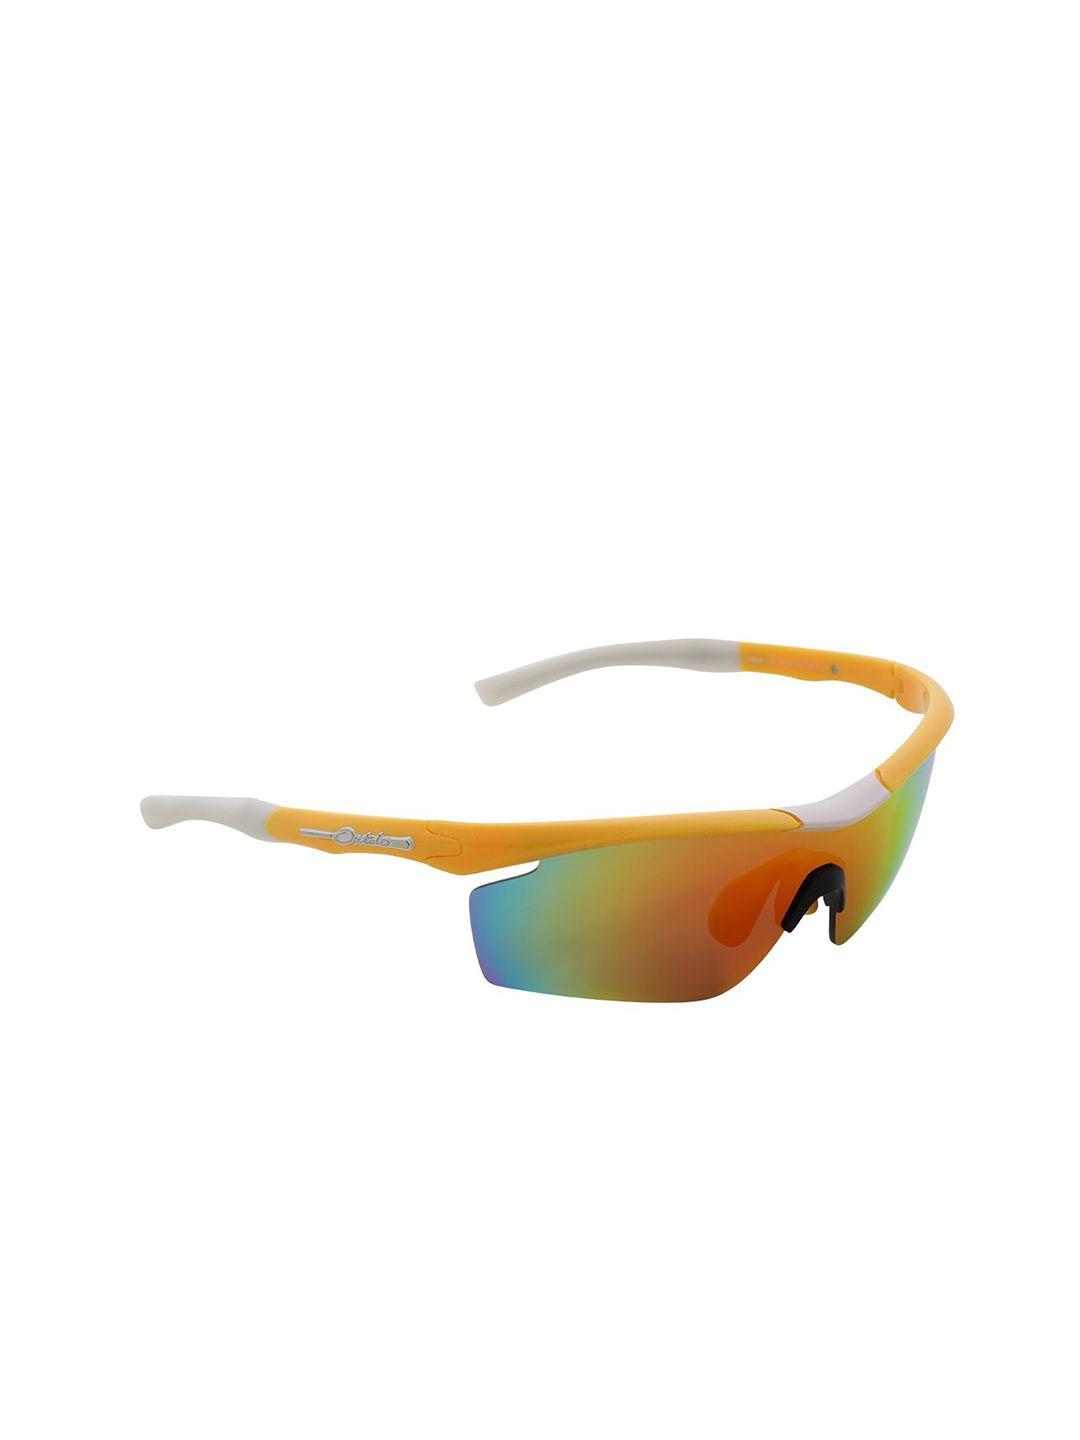 charles london men orange lens sports sunglasses with uv protected lens